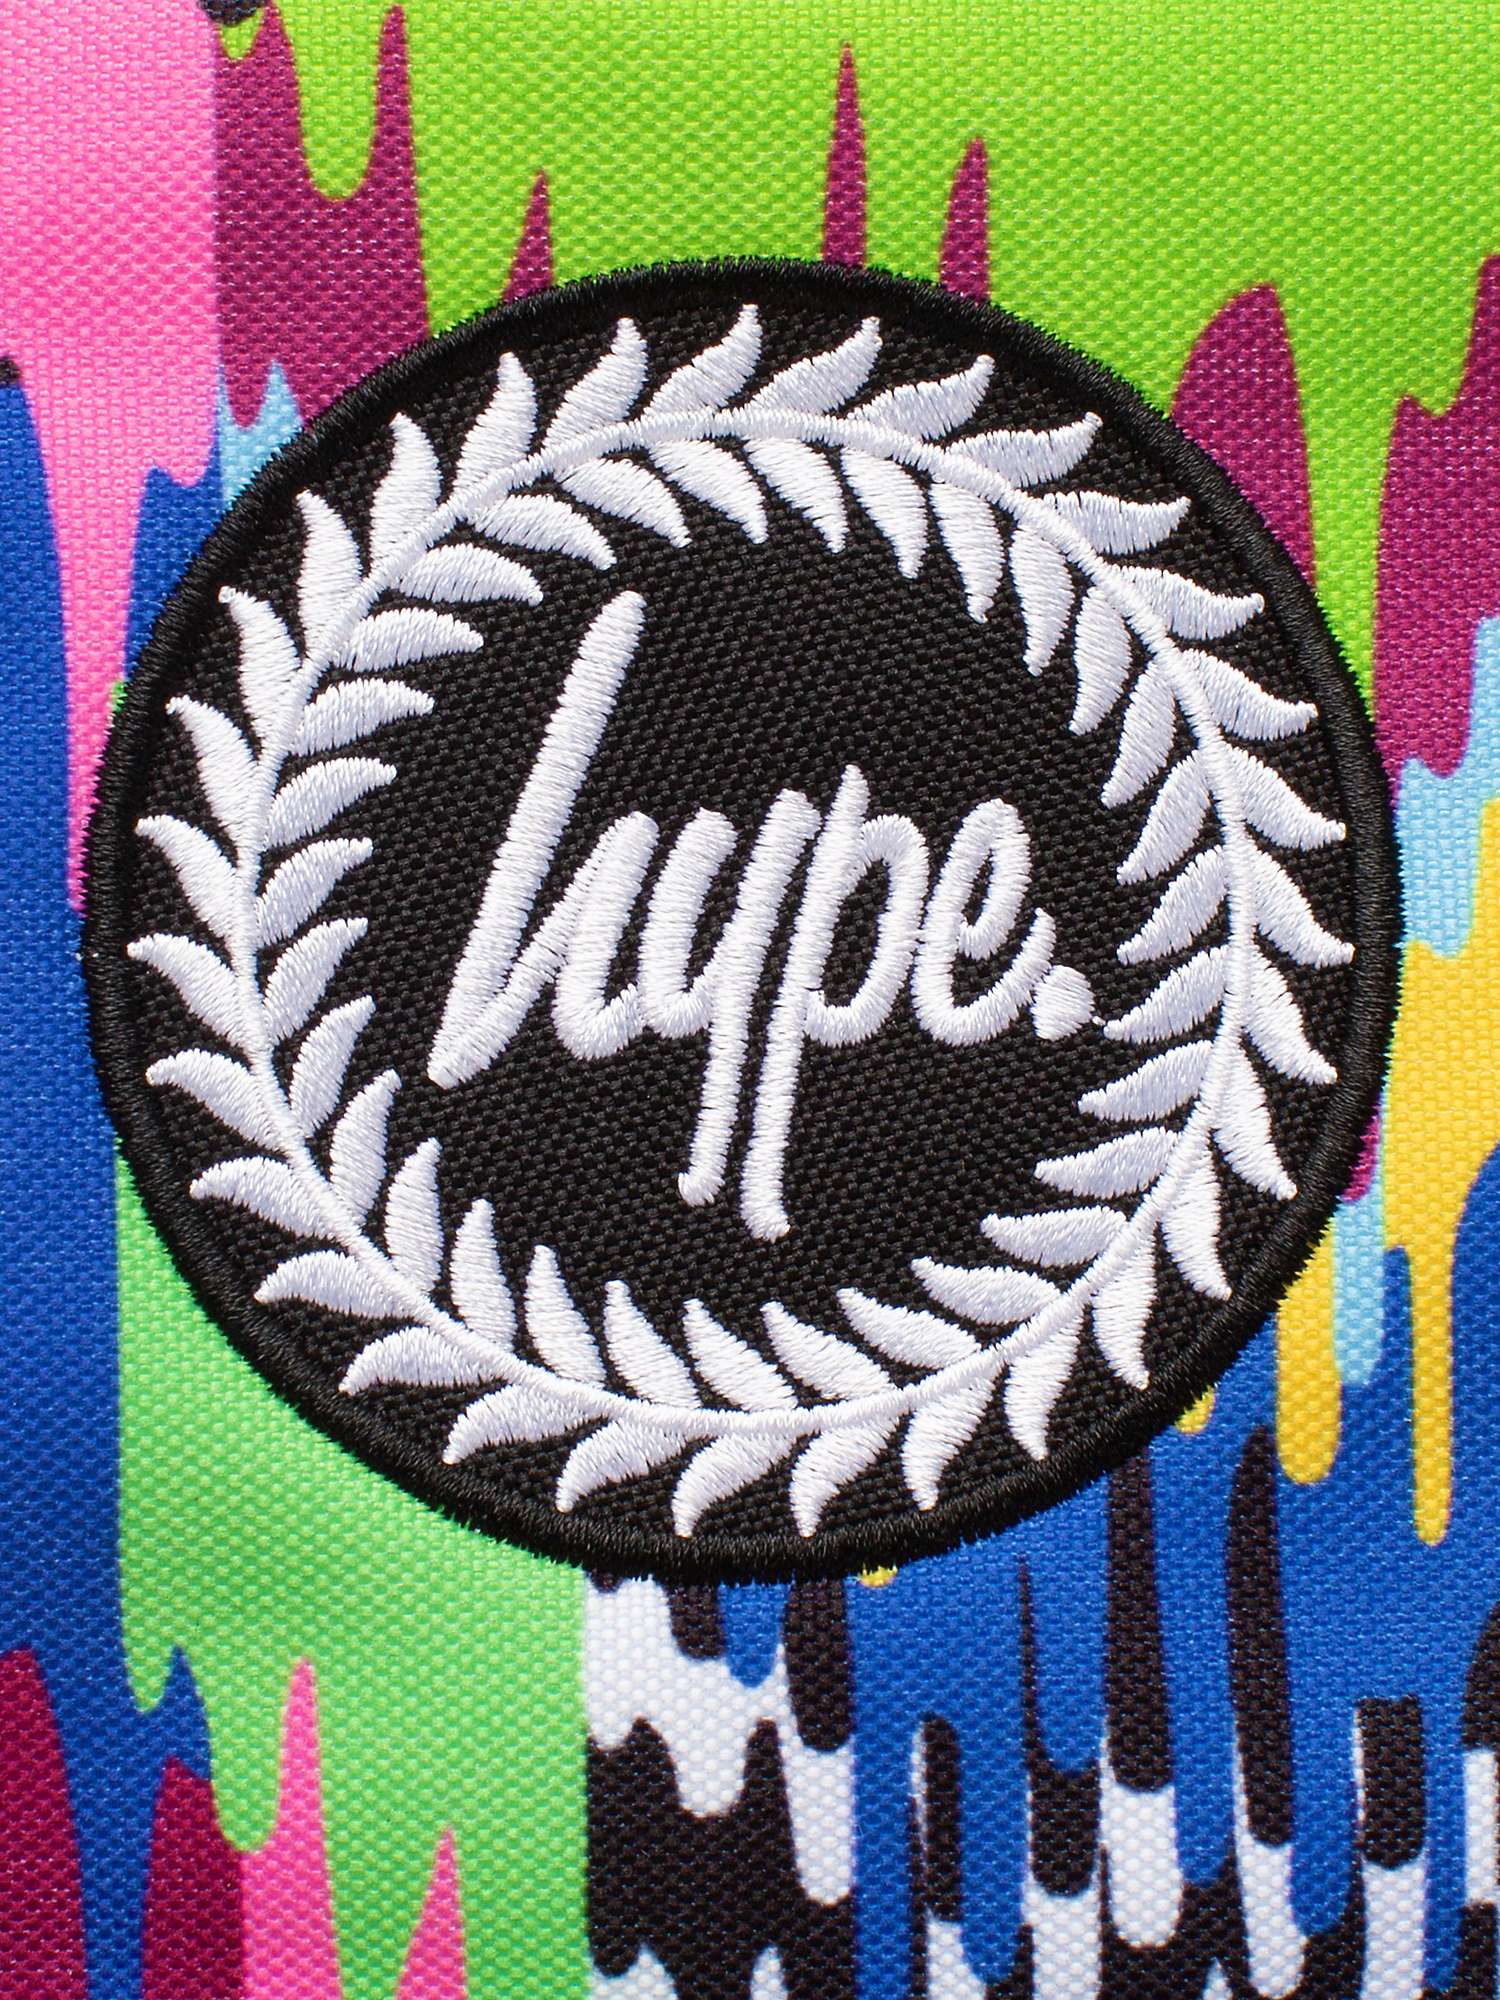 Buy Hype Kids' Trippy Drips Backpack, Multi Online at johnlewis.com